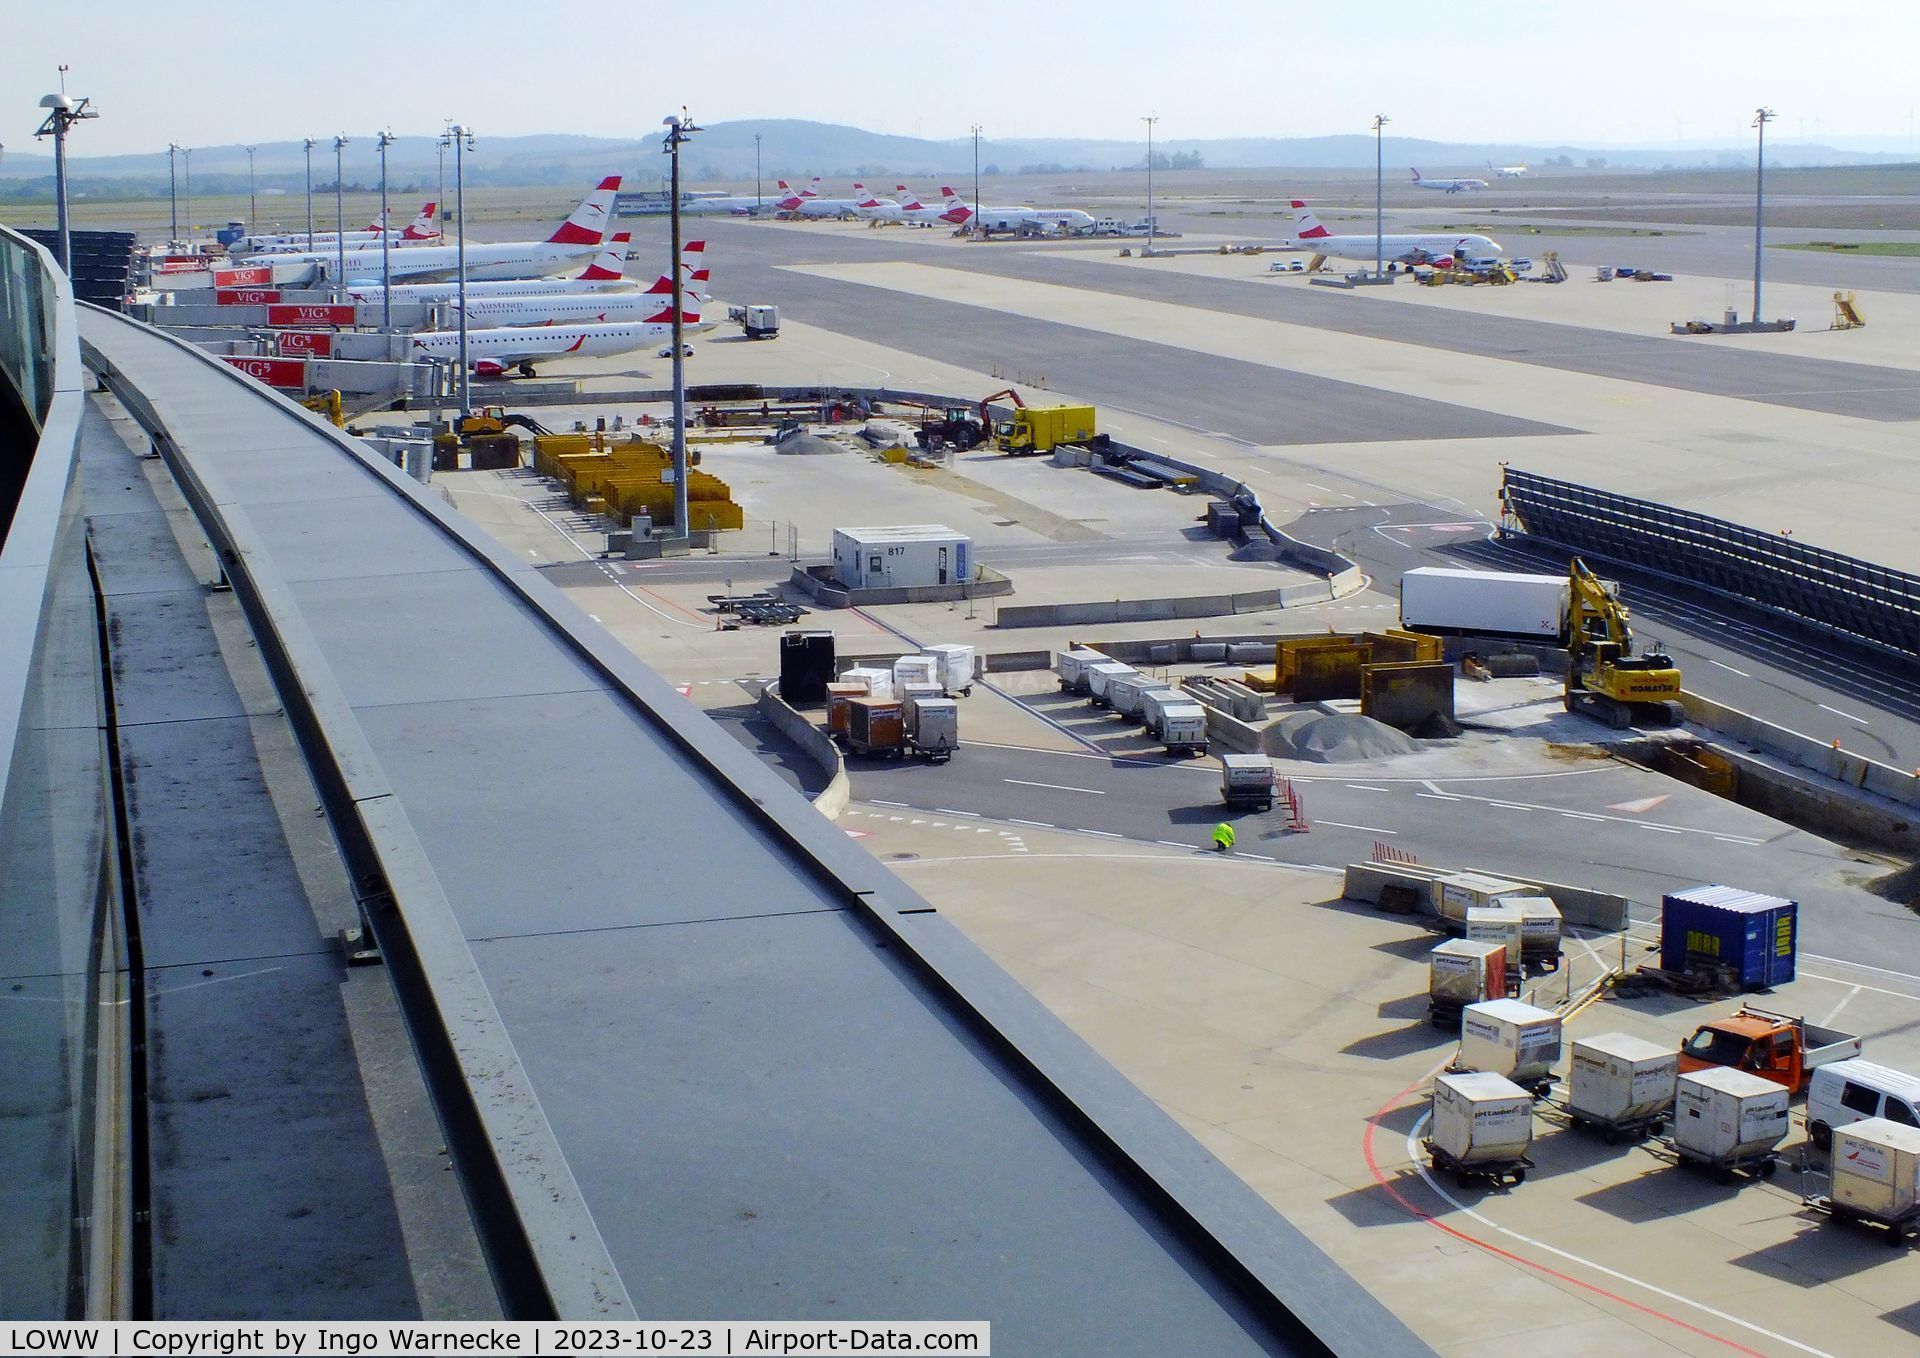 Vienna International Airport, Vienna Austria (LOWW) - apron in front of terminal 3 at Wien airport